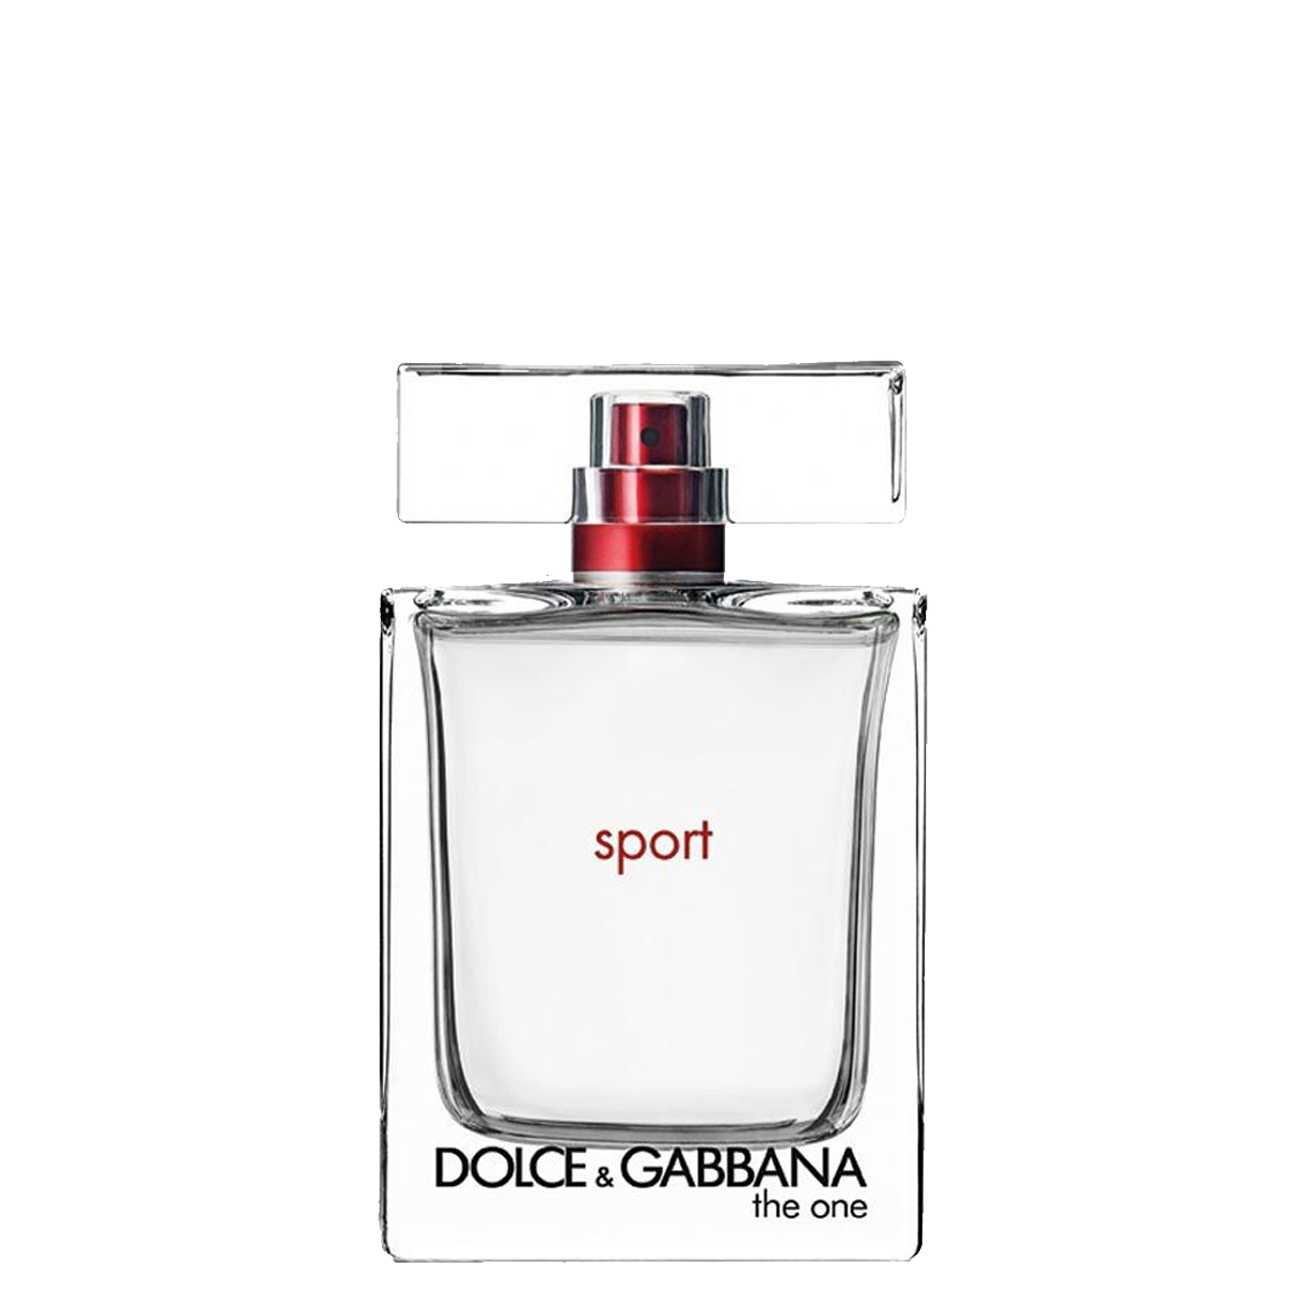 Apa de Toaleta Dolce & Gabbana THE ONE SPORT 50ml cu comanda online